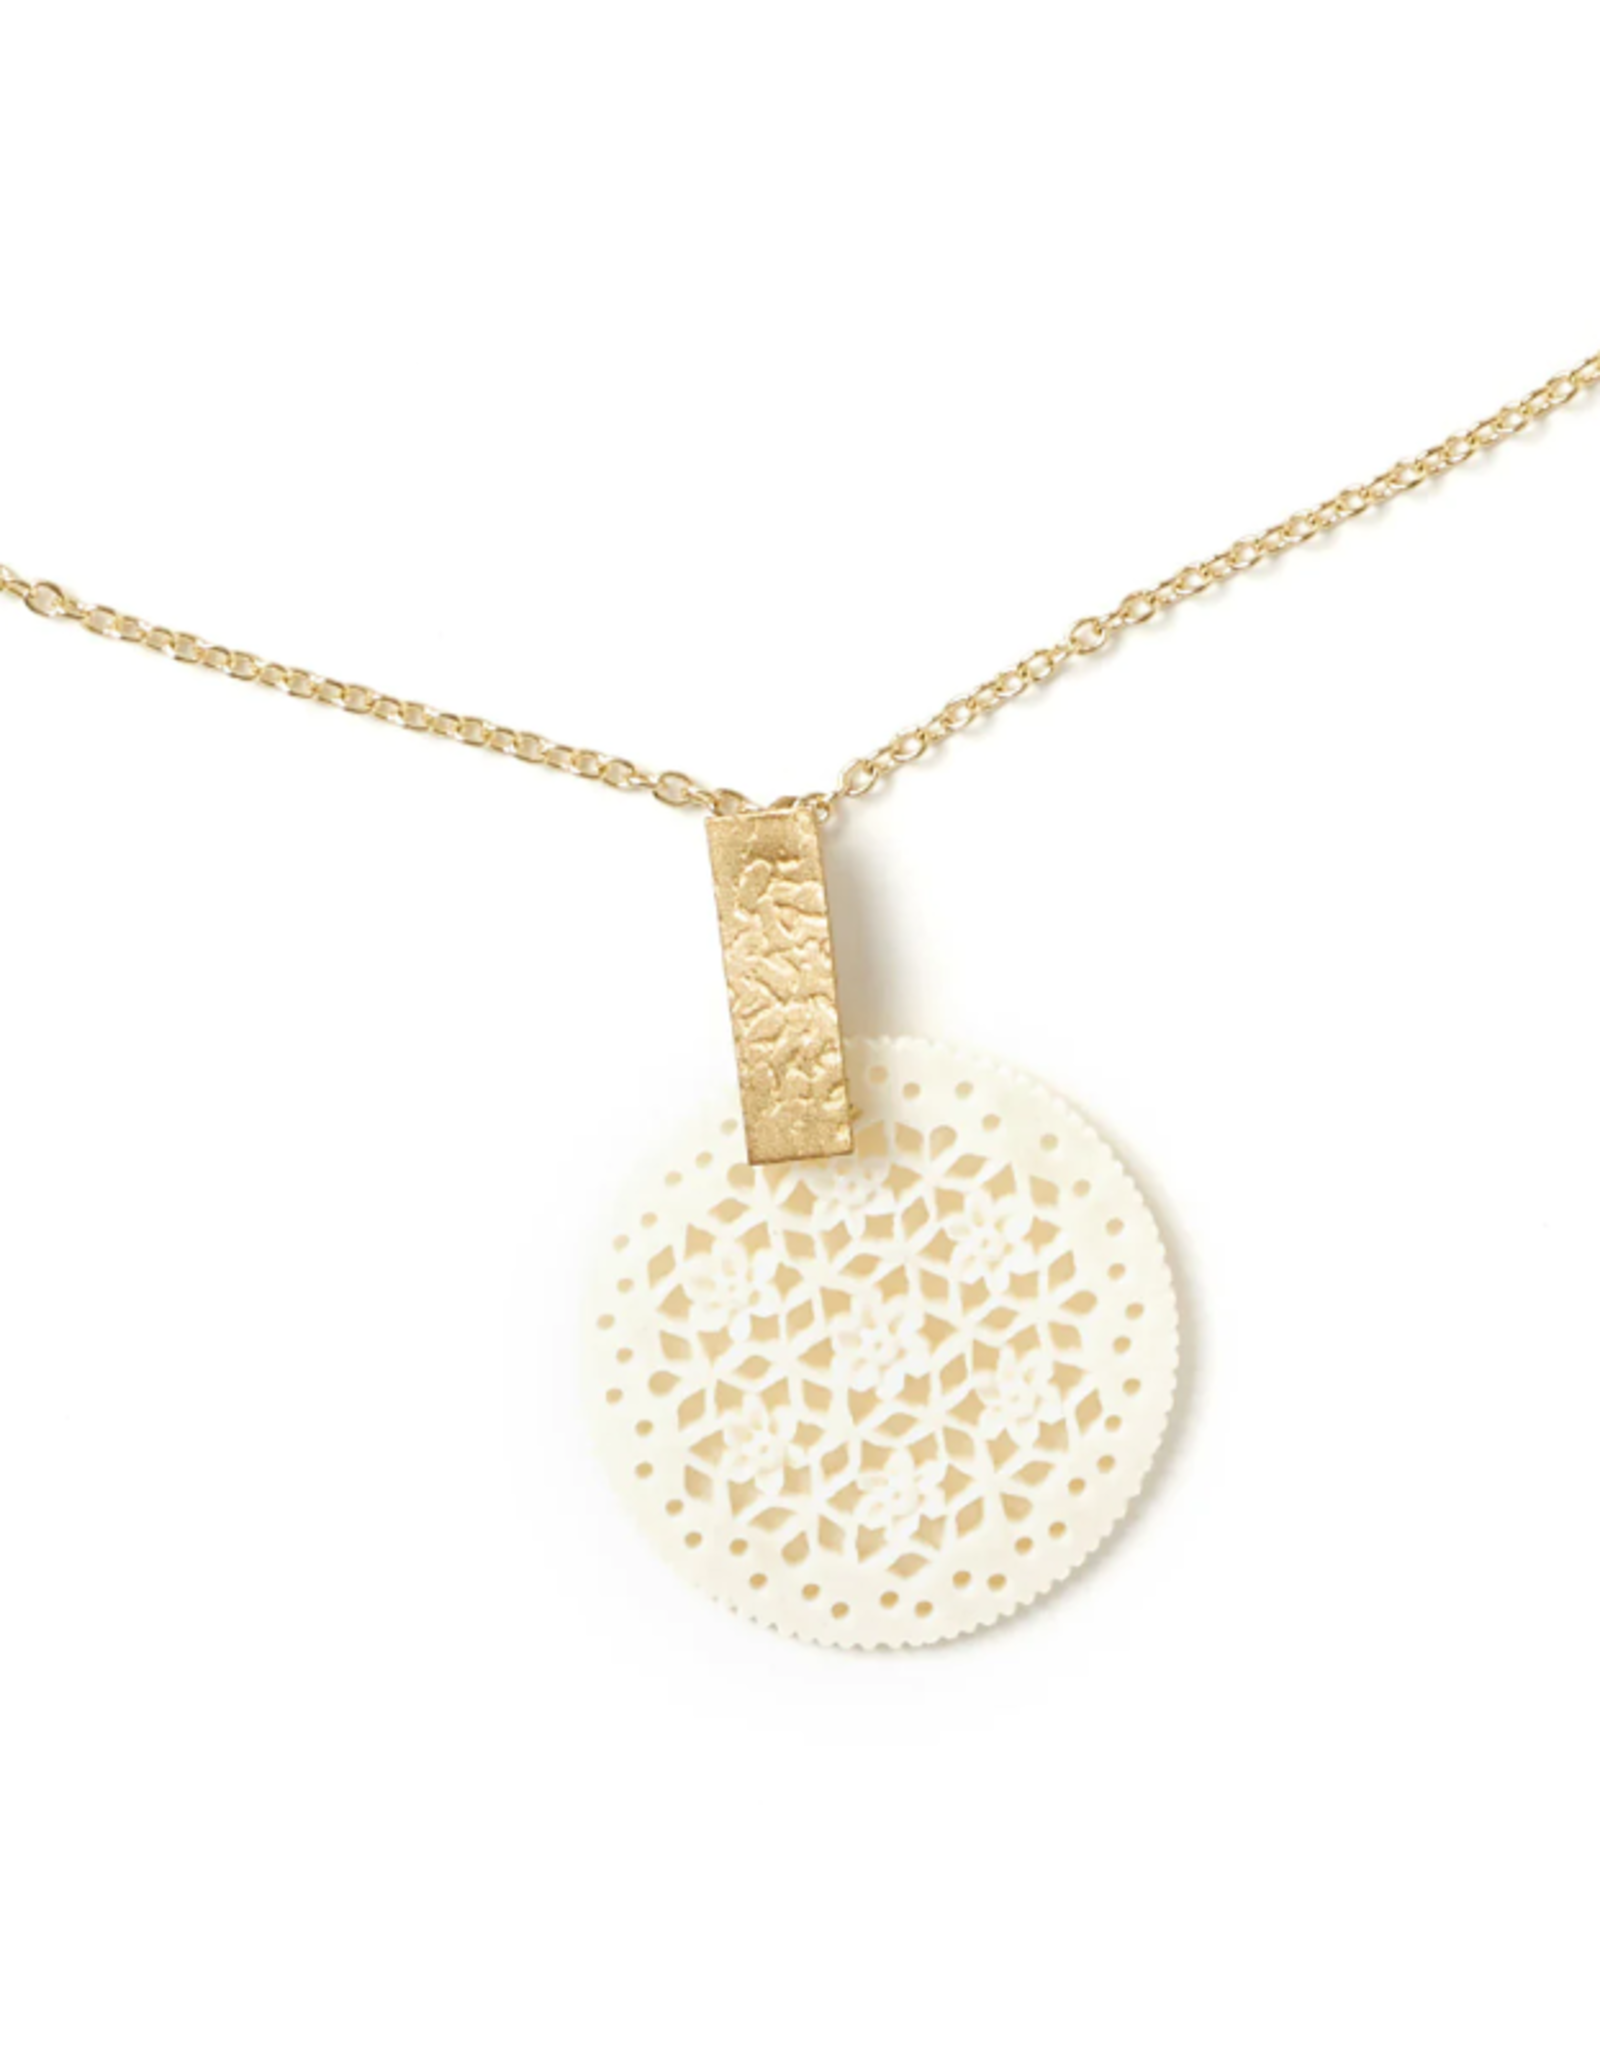 India Charu Bone Lace & Brass Pendant Drop Necklace, India